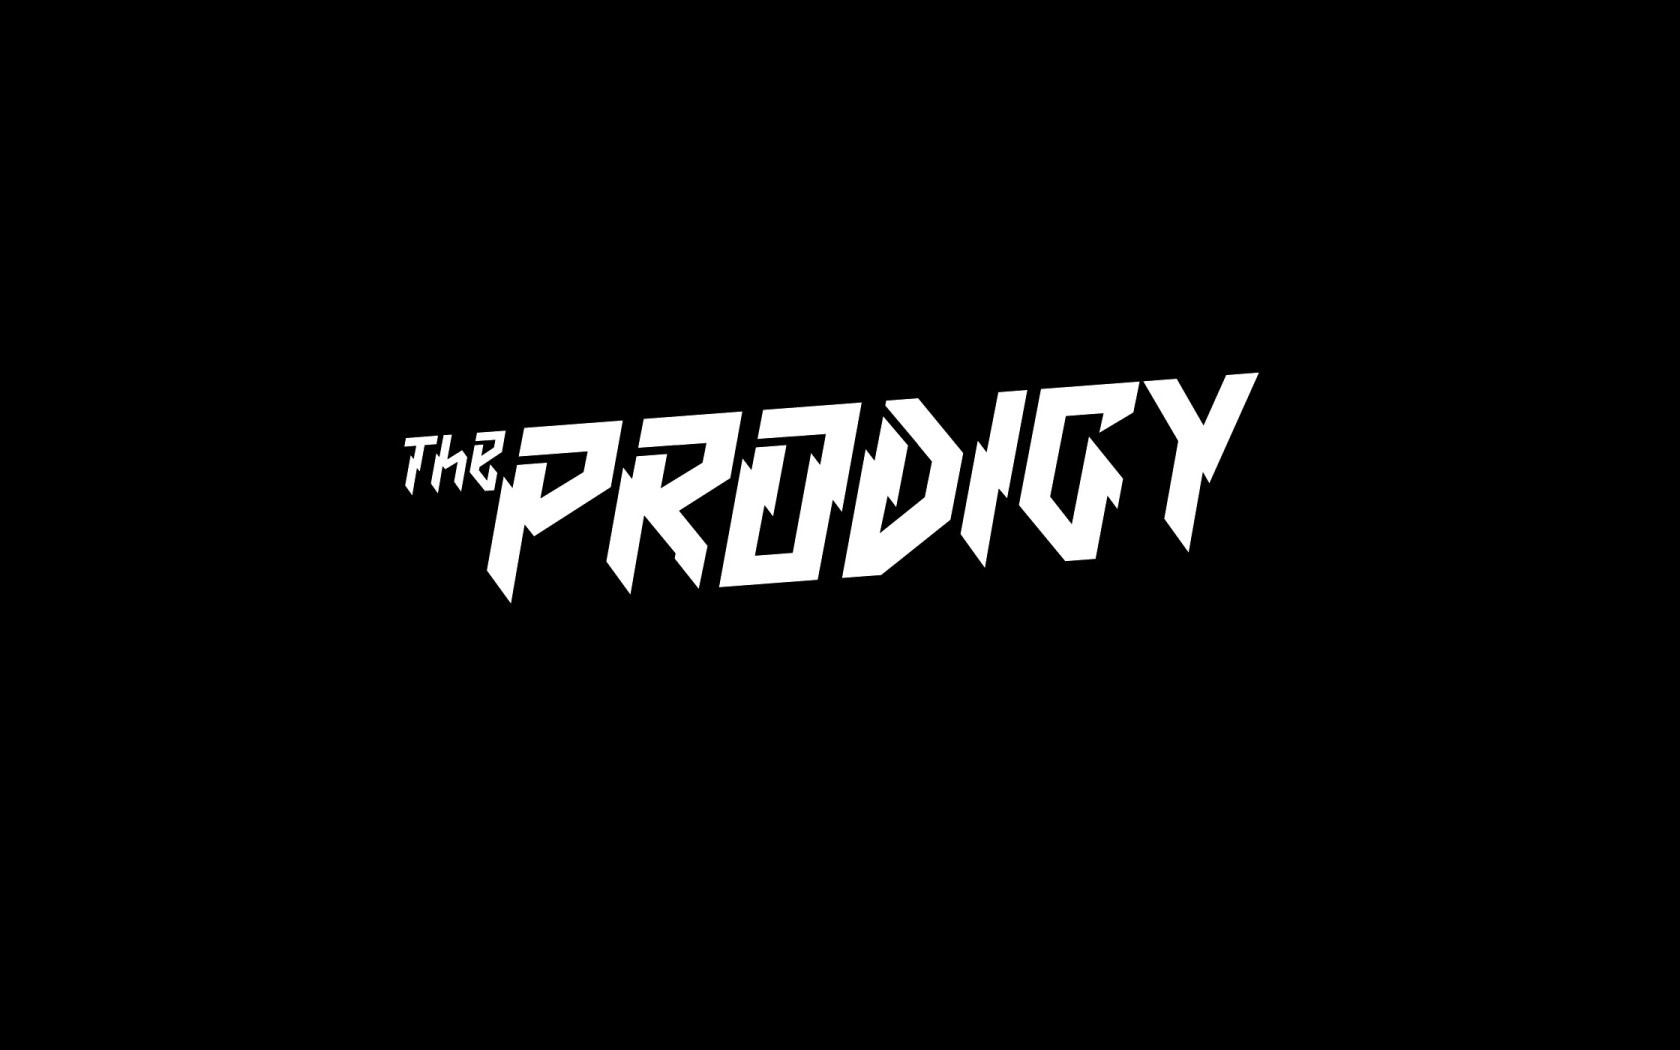 Text logo brand the prodigy puter wallpaper font